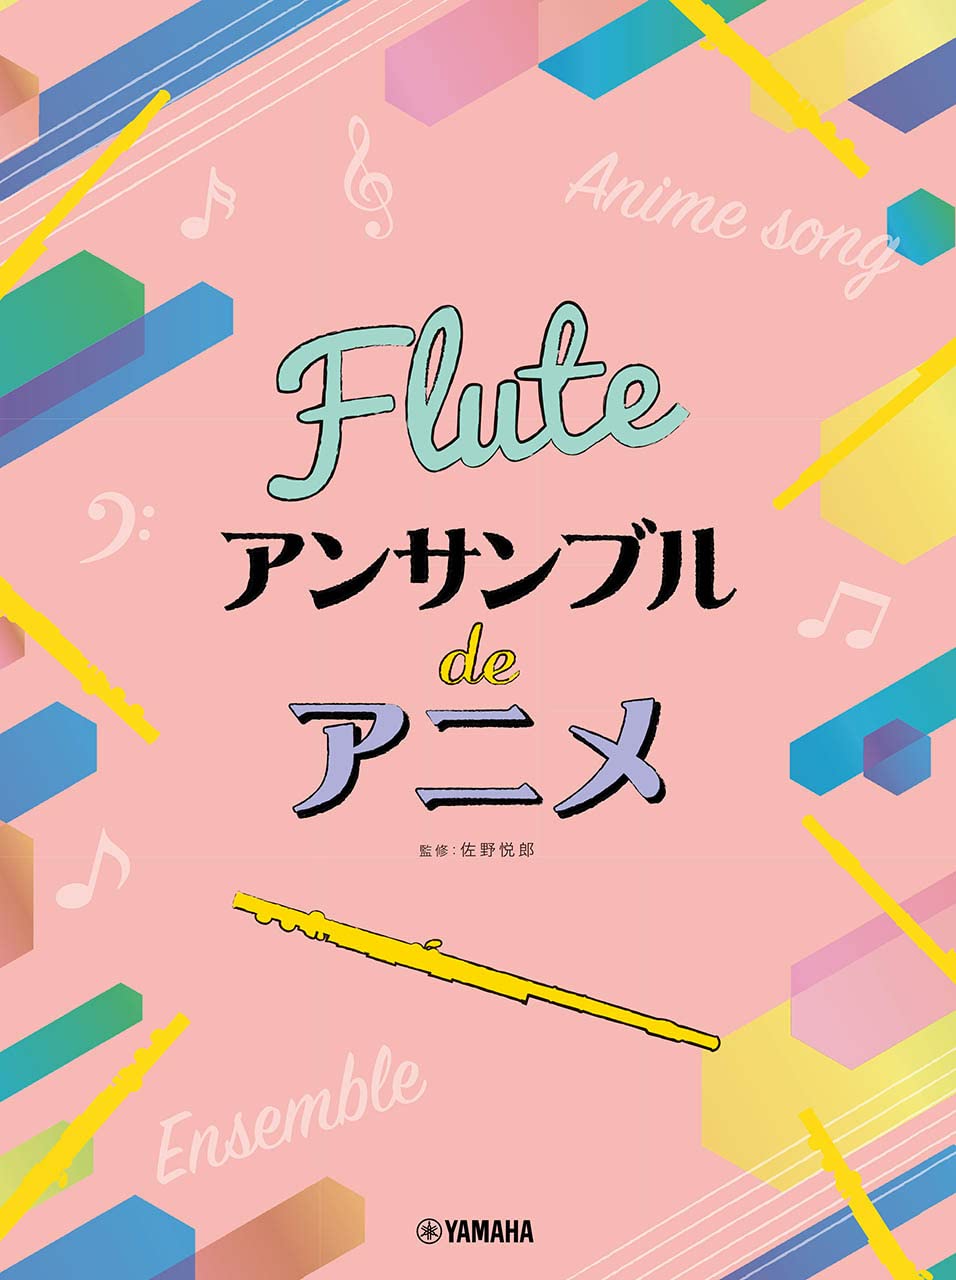 Sakura Sakura ouran High School Host Club sheet Music Plus oboe  museScore black Butler Flute viola Saxophone Violin  Anyrgb